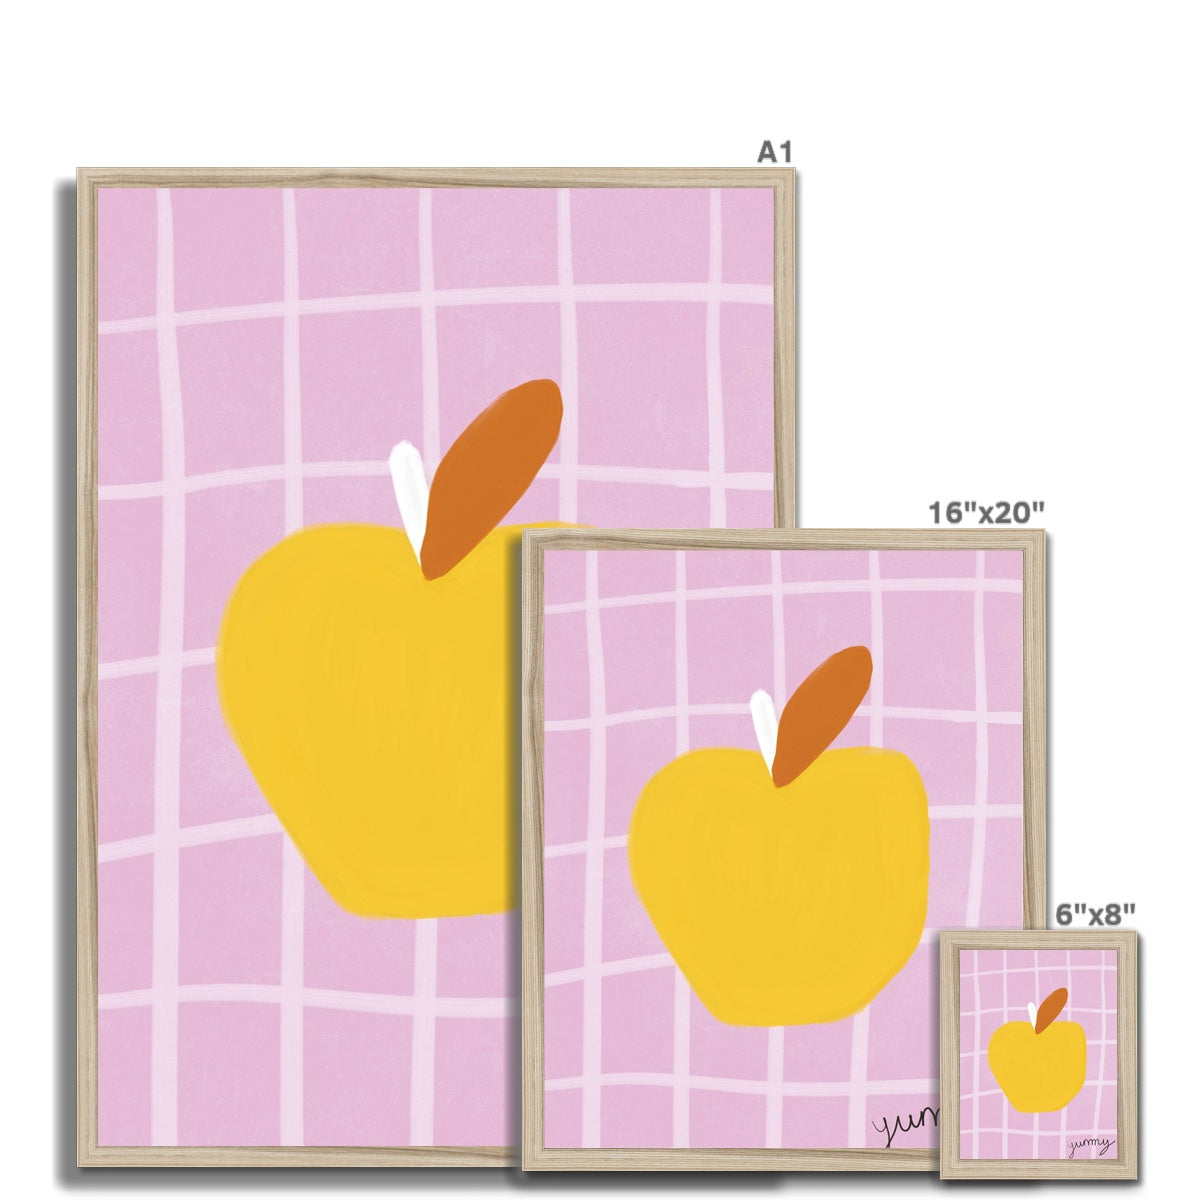 Yummy Apple Print - Dark Pink, Dark Yellow Framed Print